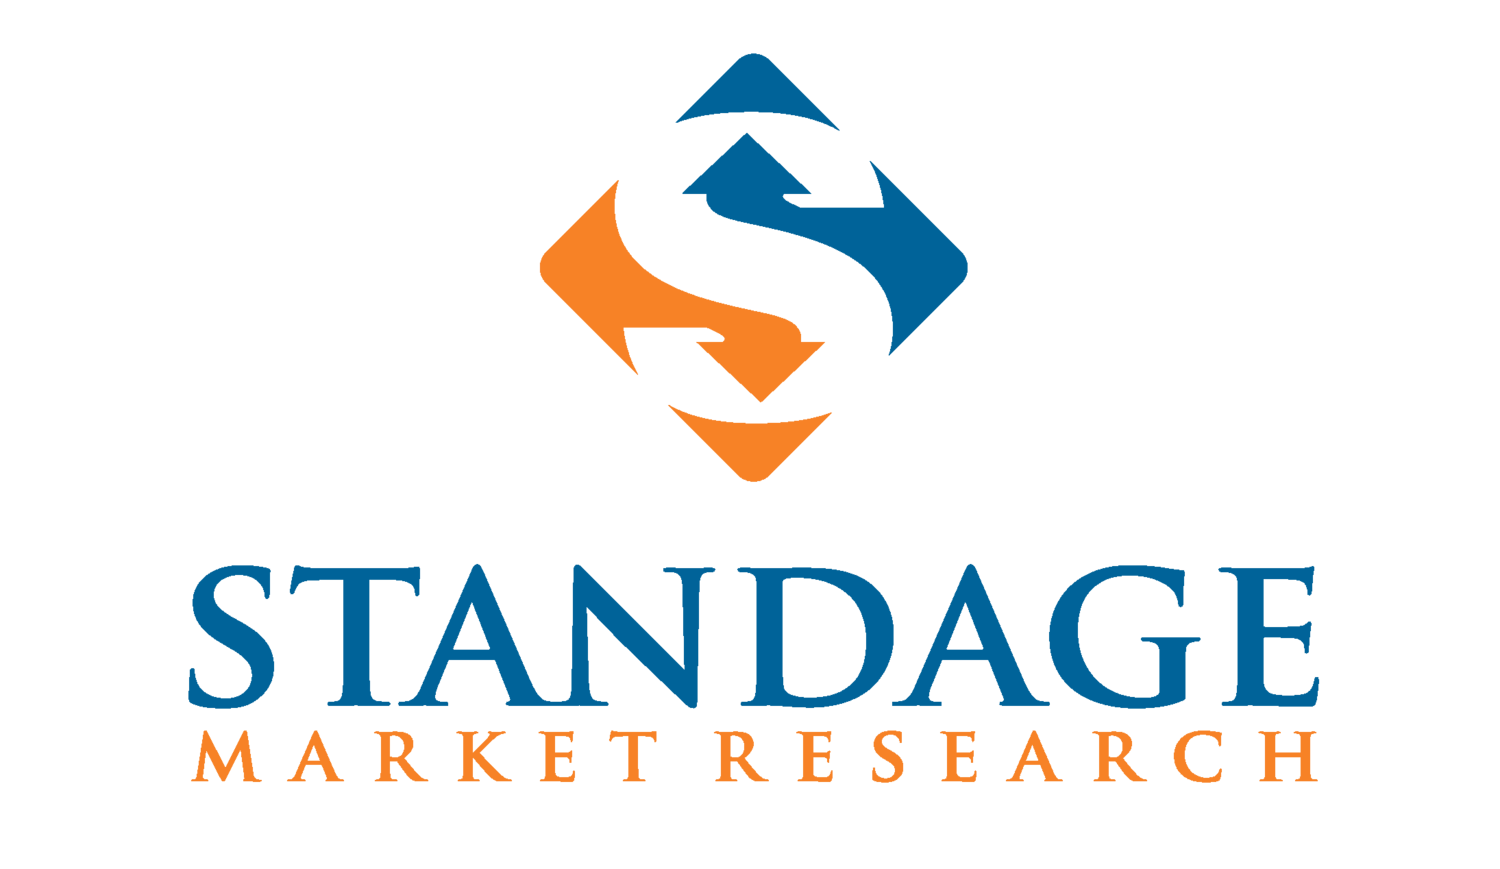 Standage Market Research LLC